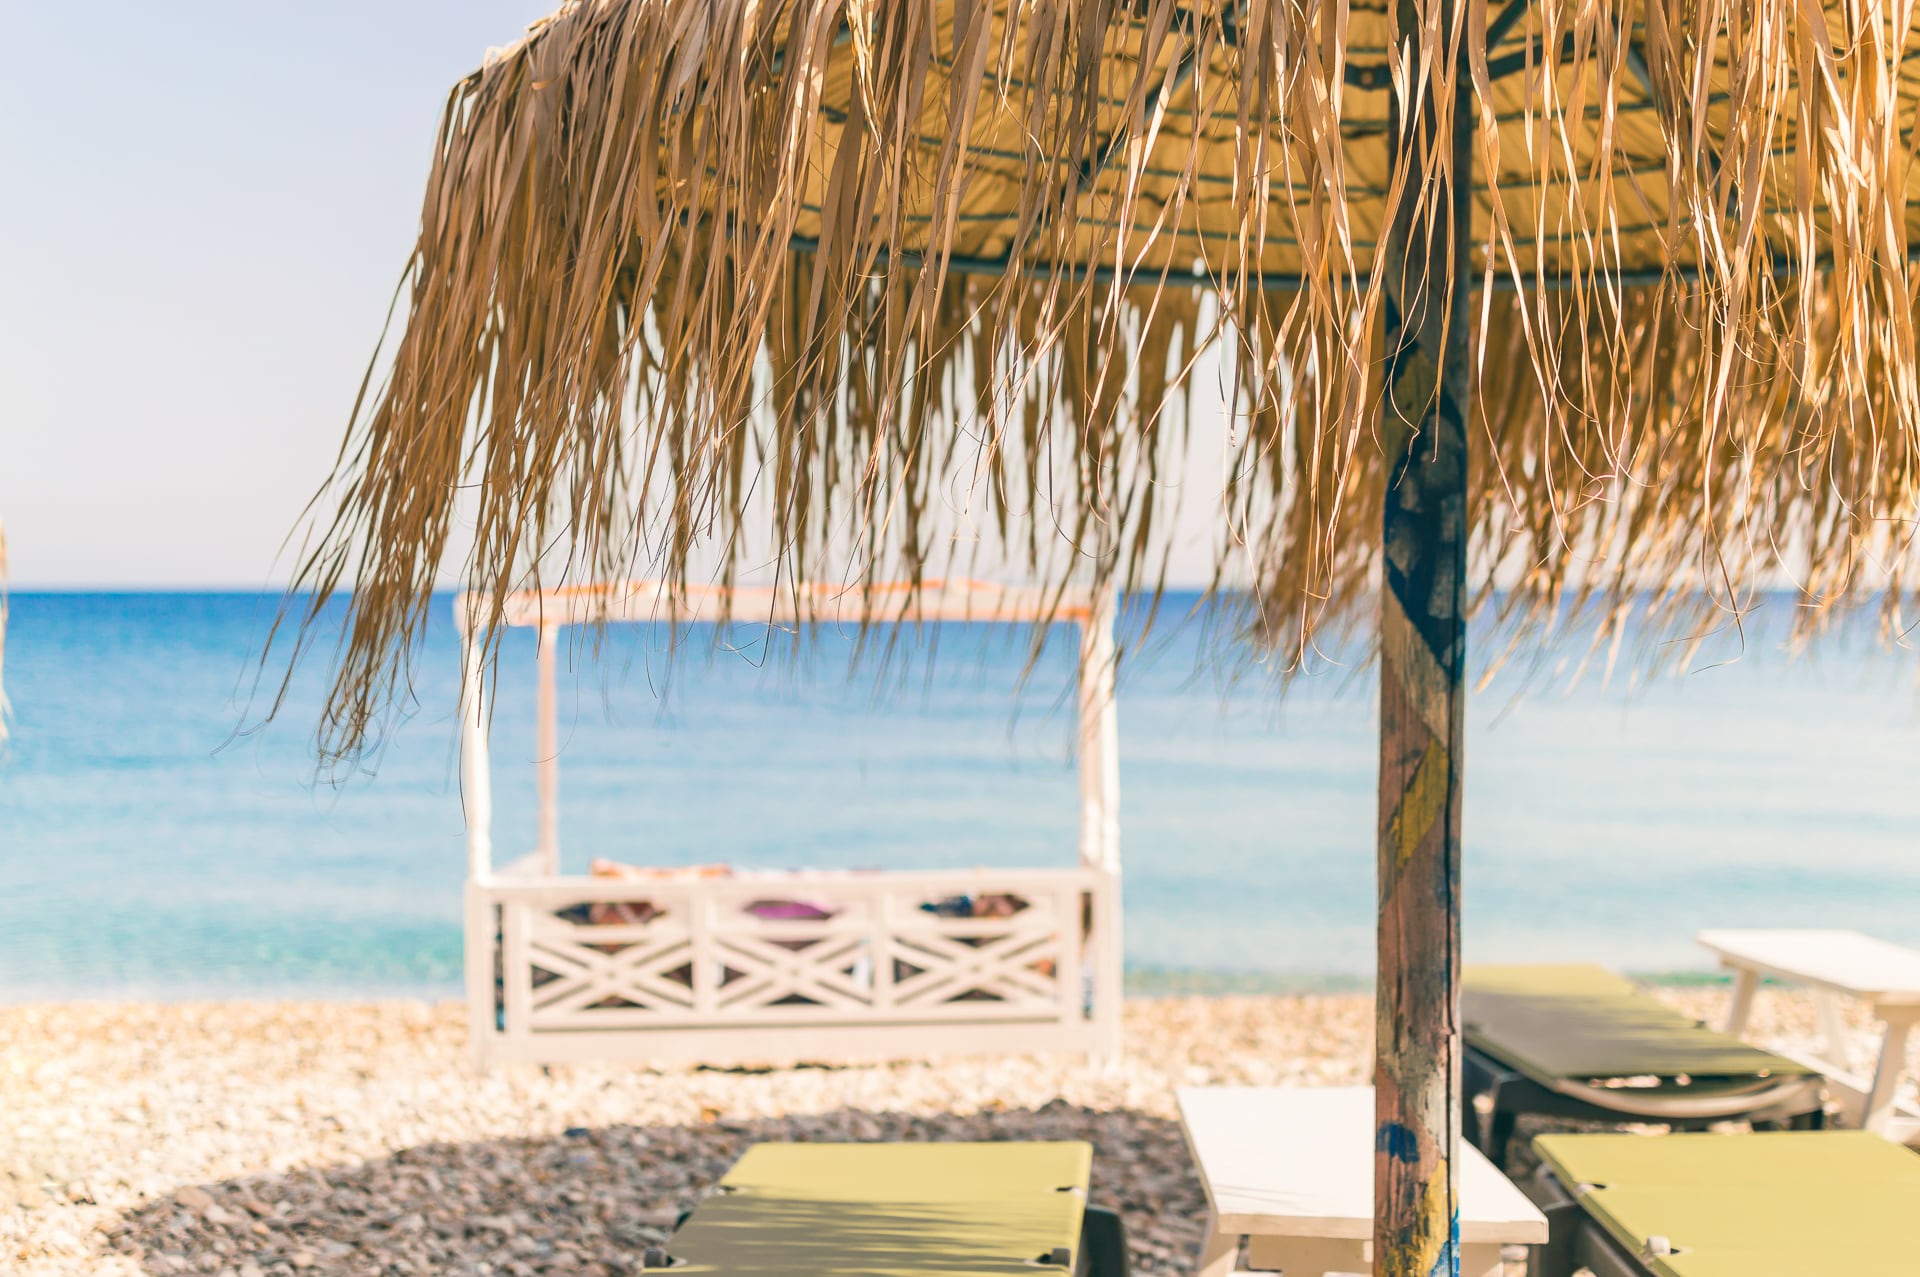 Griechenland Samos Kokkari Beach Hotel Strand